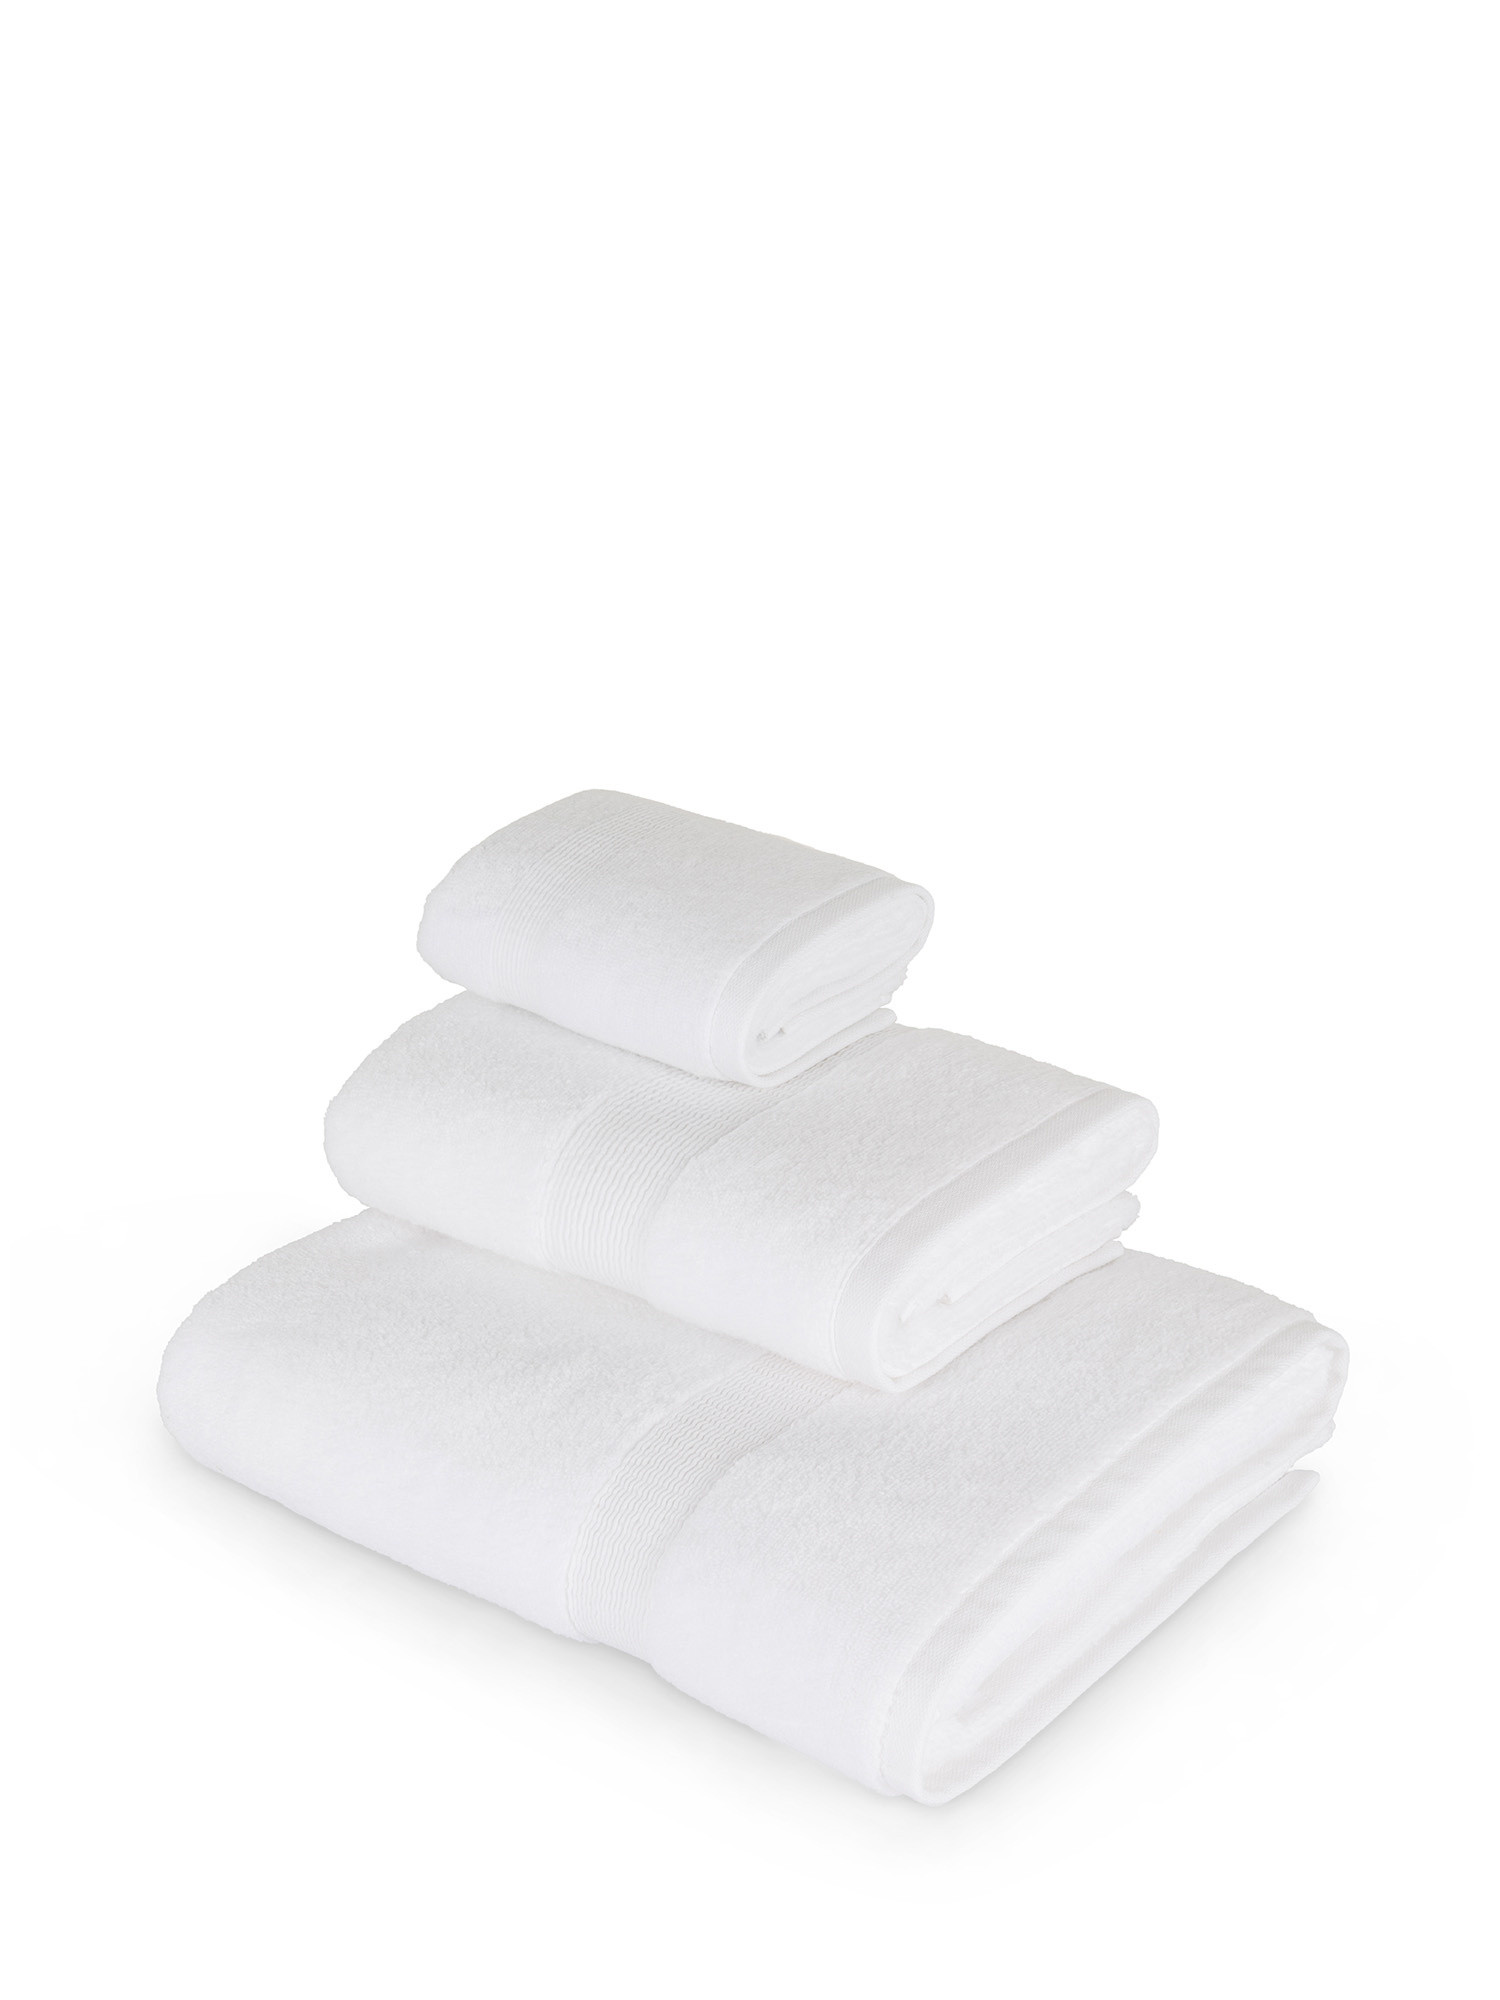 Asciugamano in spugna di puro cotone tinta unita ultra soffice, Bianco, large image number 0